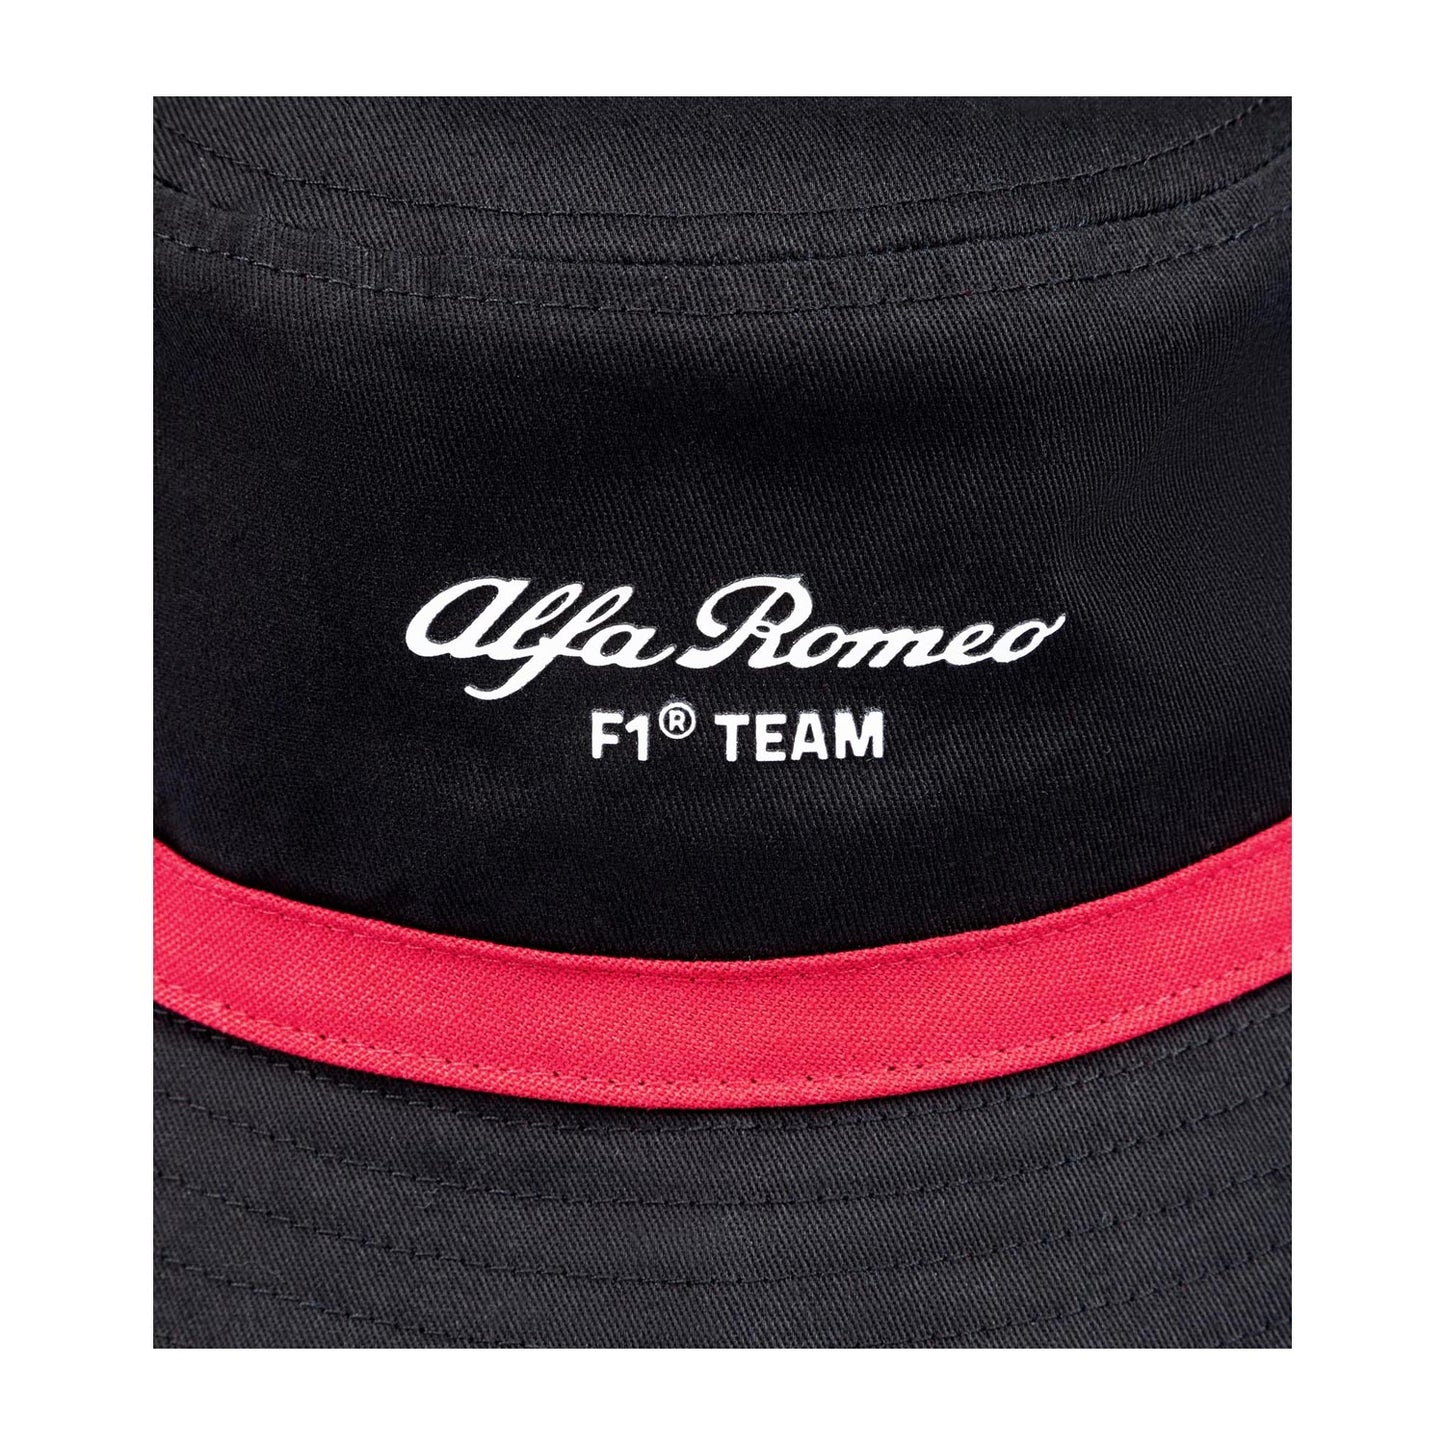 2023 Alfa Romeo F1 Mens Team Bucket Hat